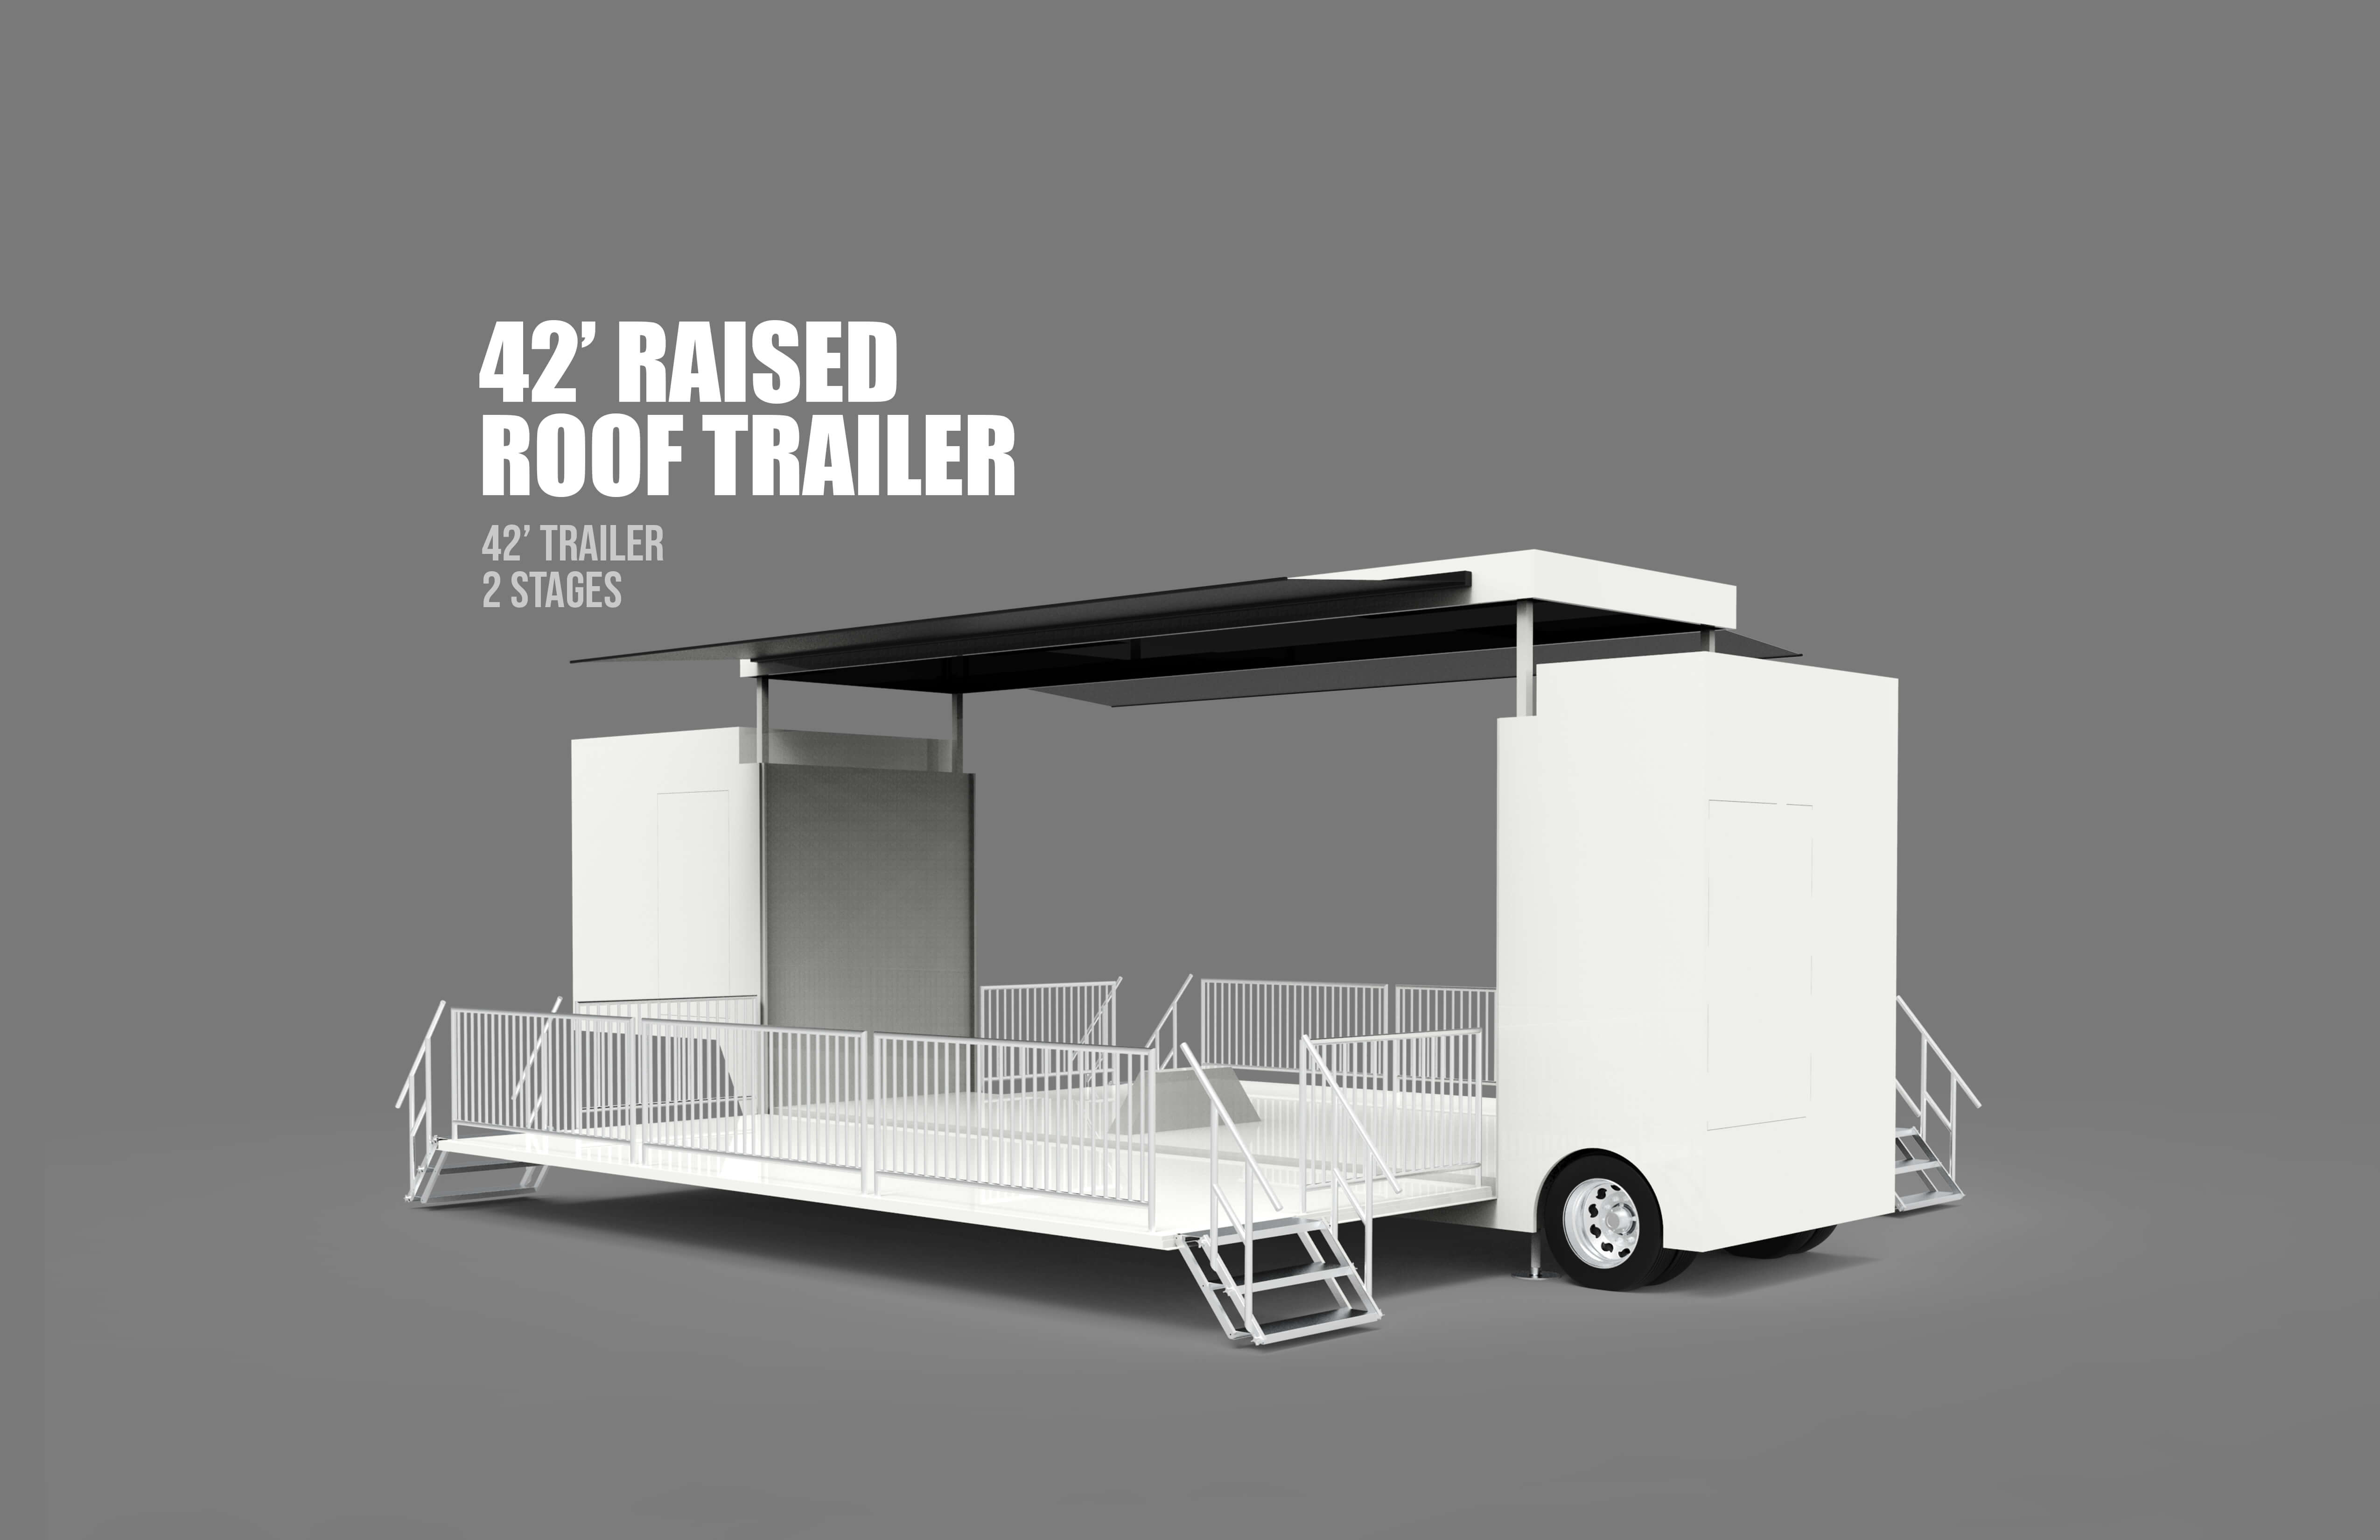 42 Raised Roof Trailer